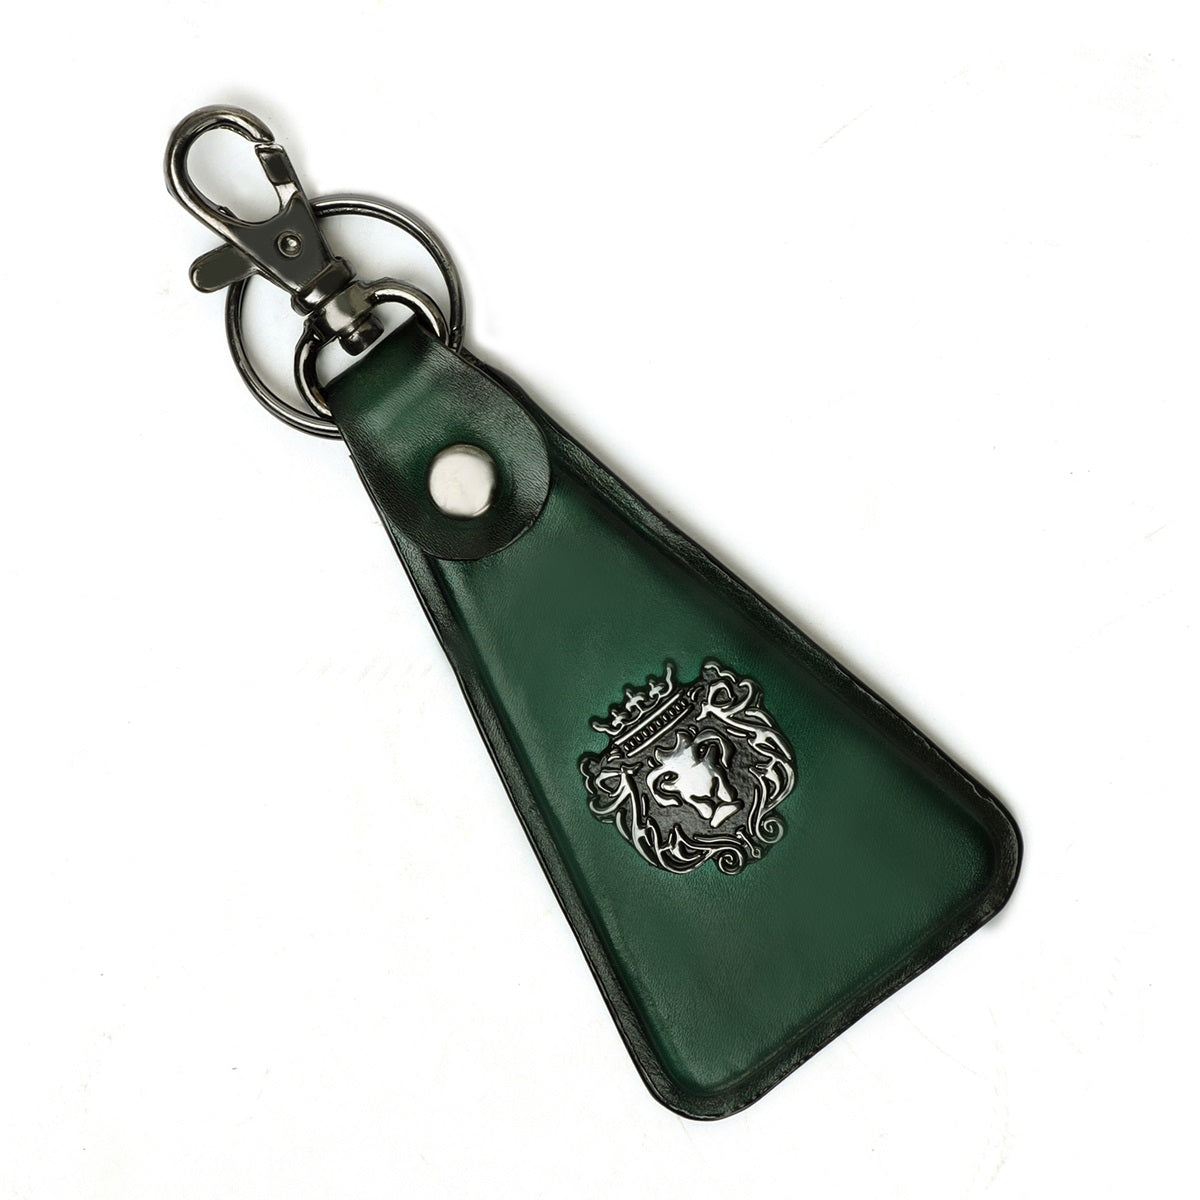 Green Triangular Leather Loop Ring Brune And Bareskin Keychain